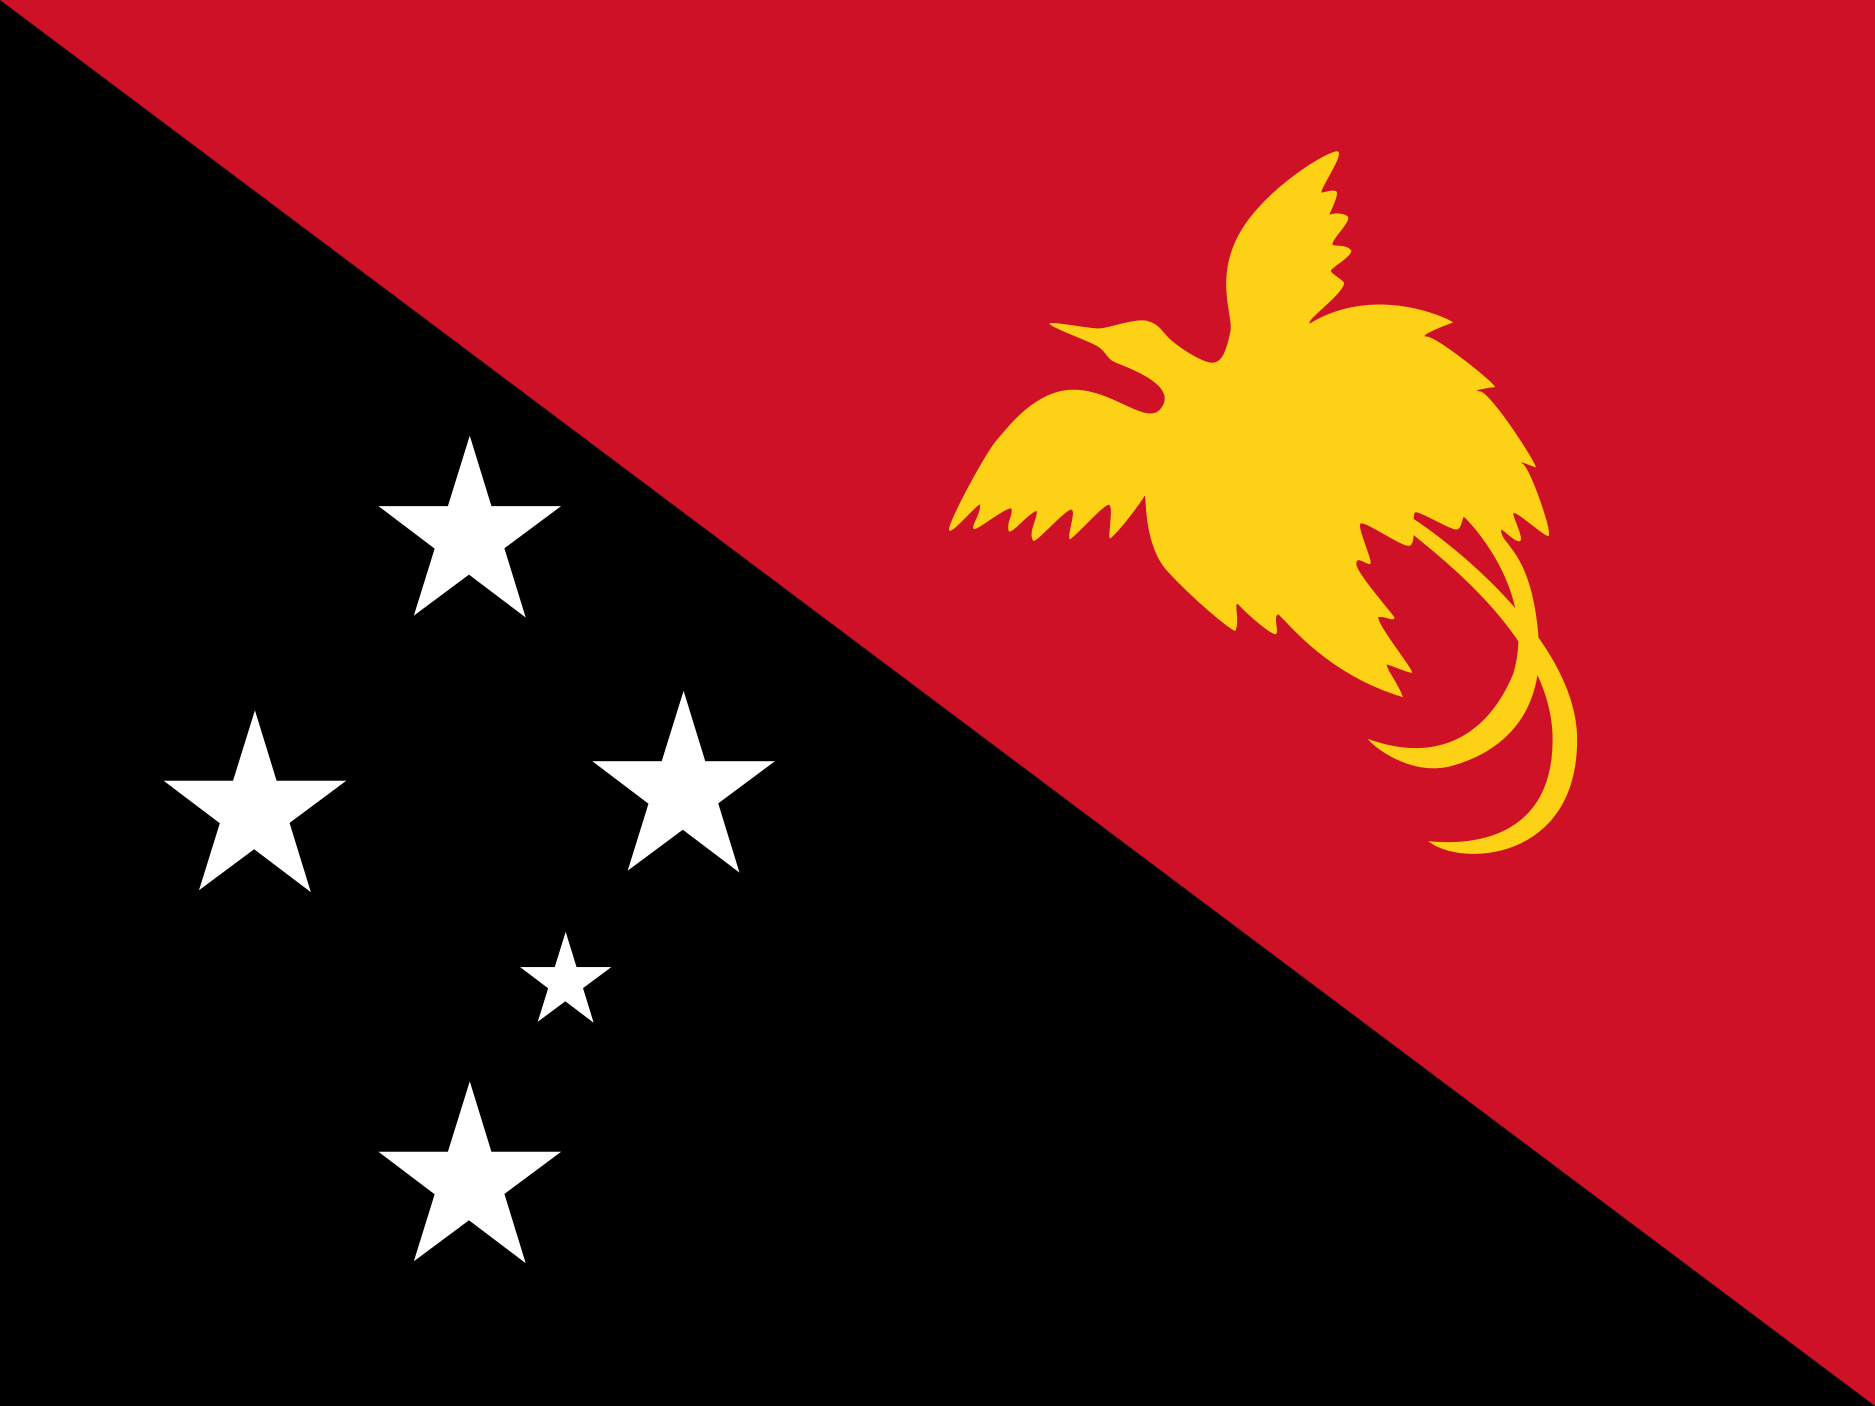 Papua New Guinea Flag Image - Free Download